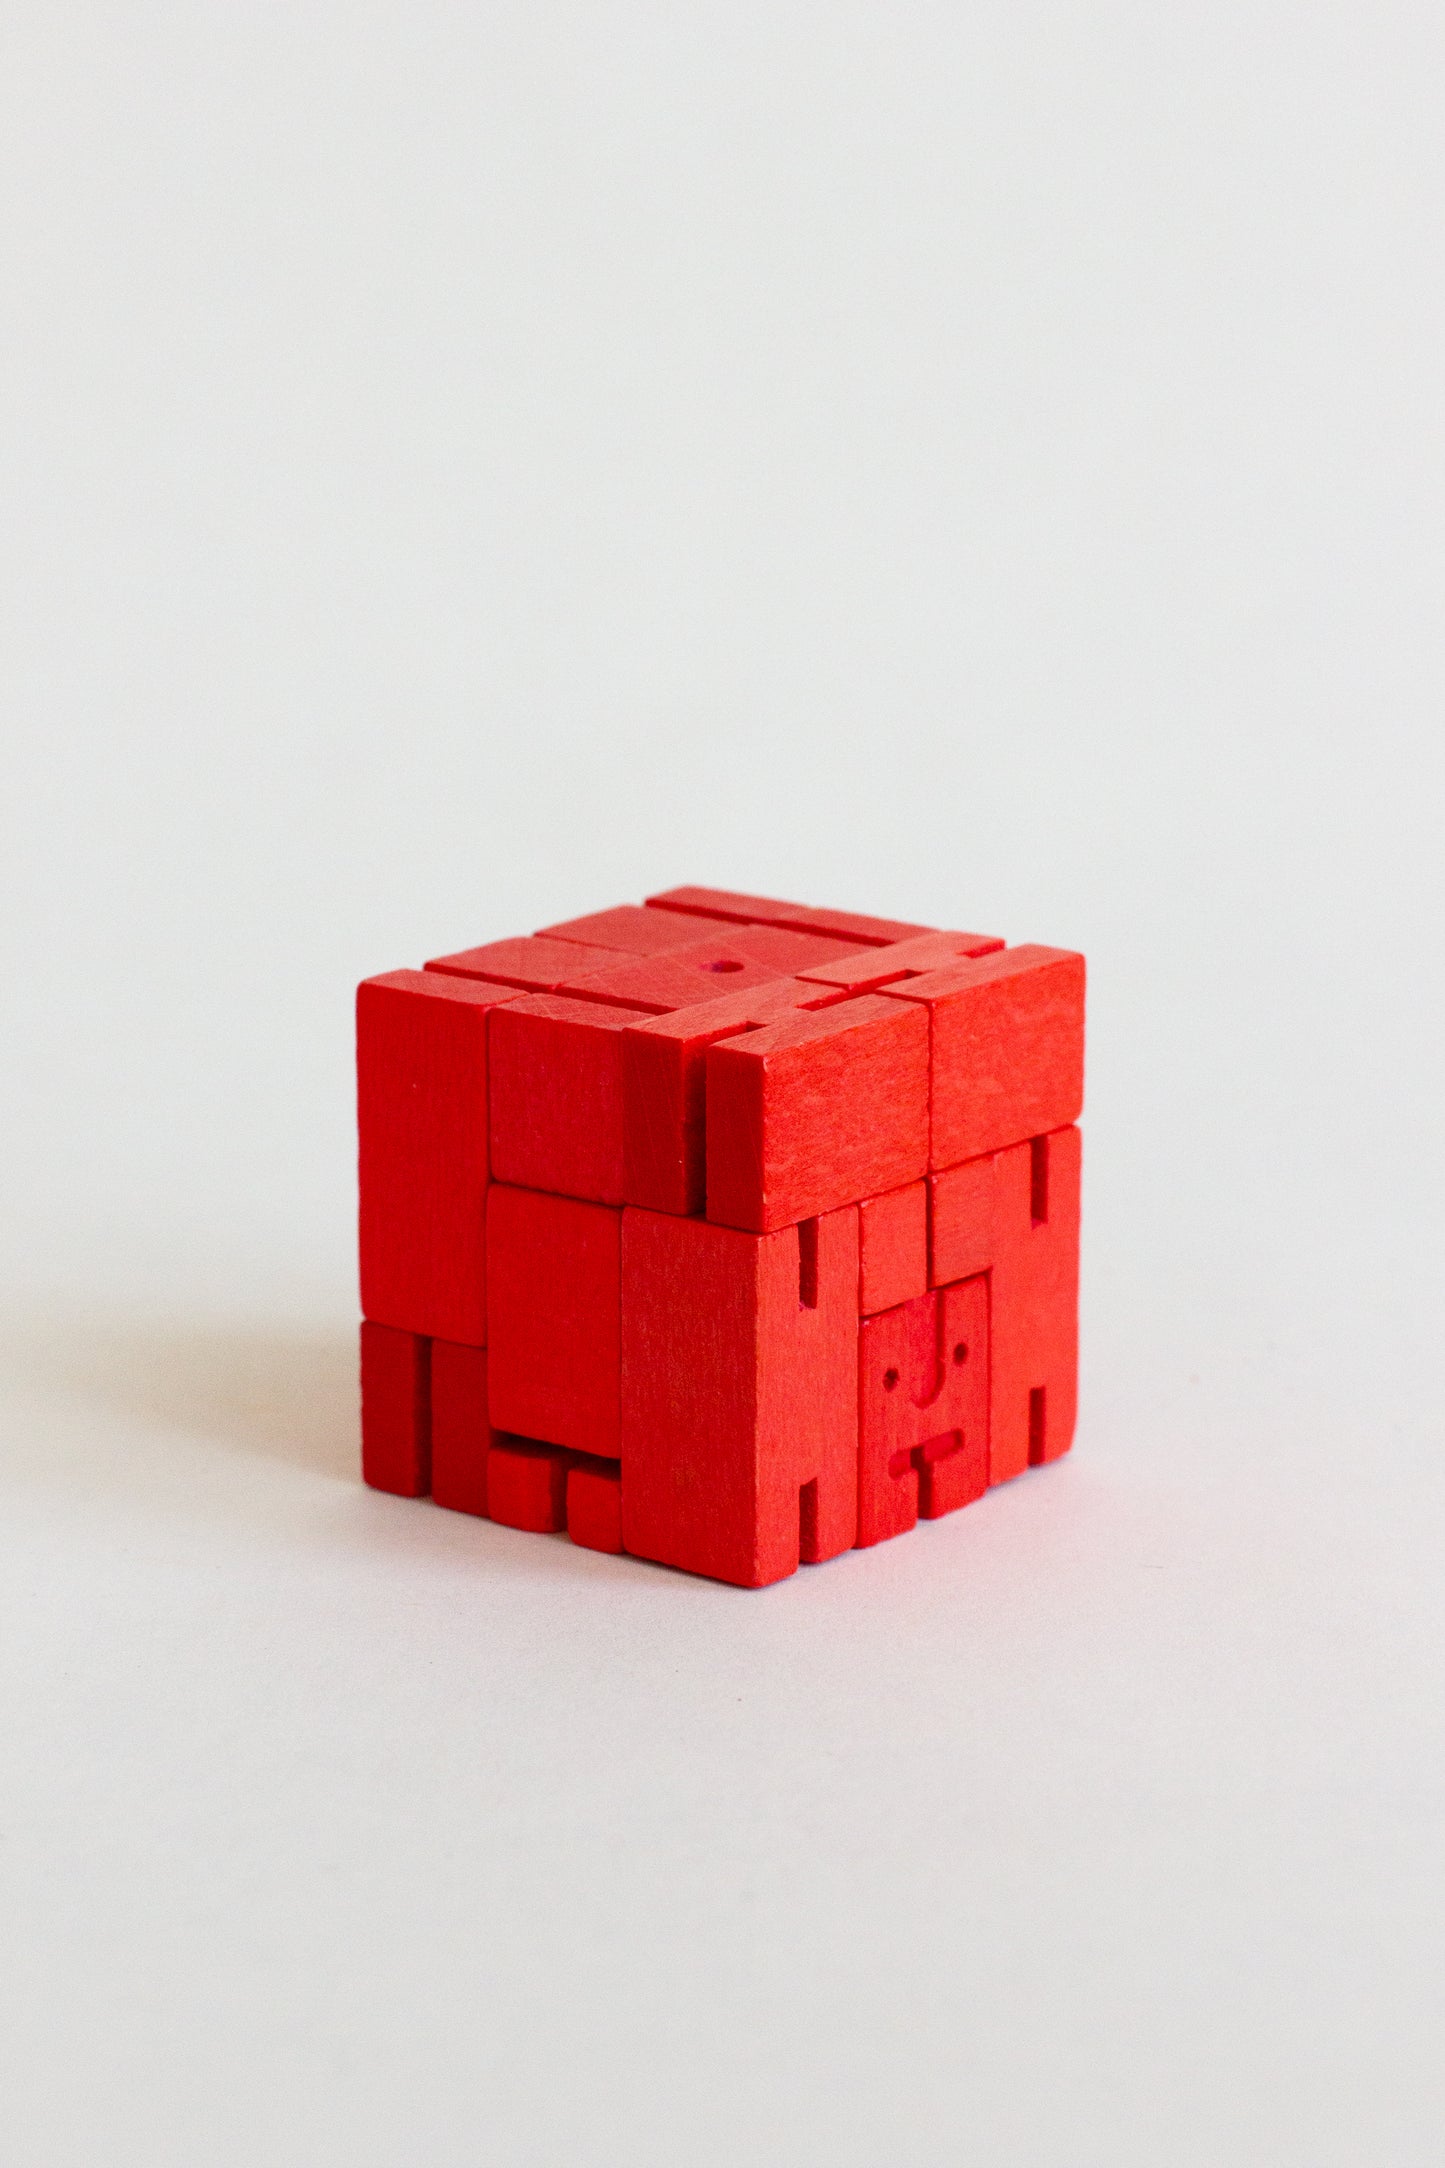 Micro Cubebot